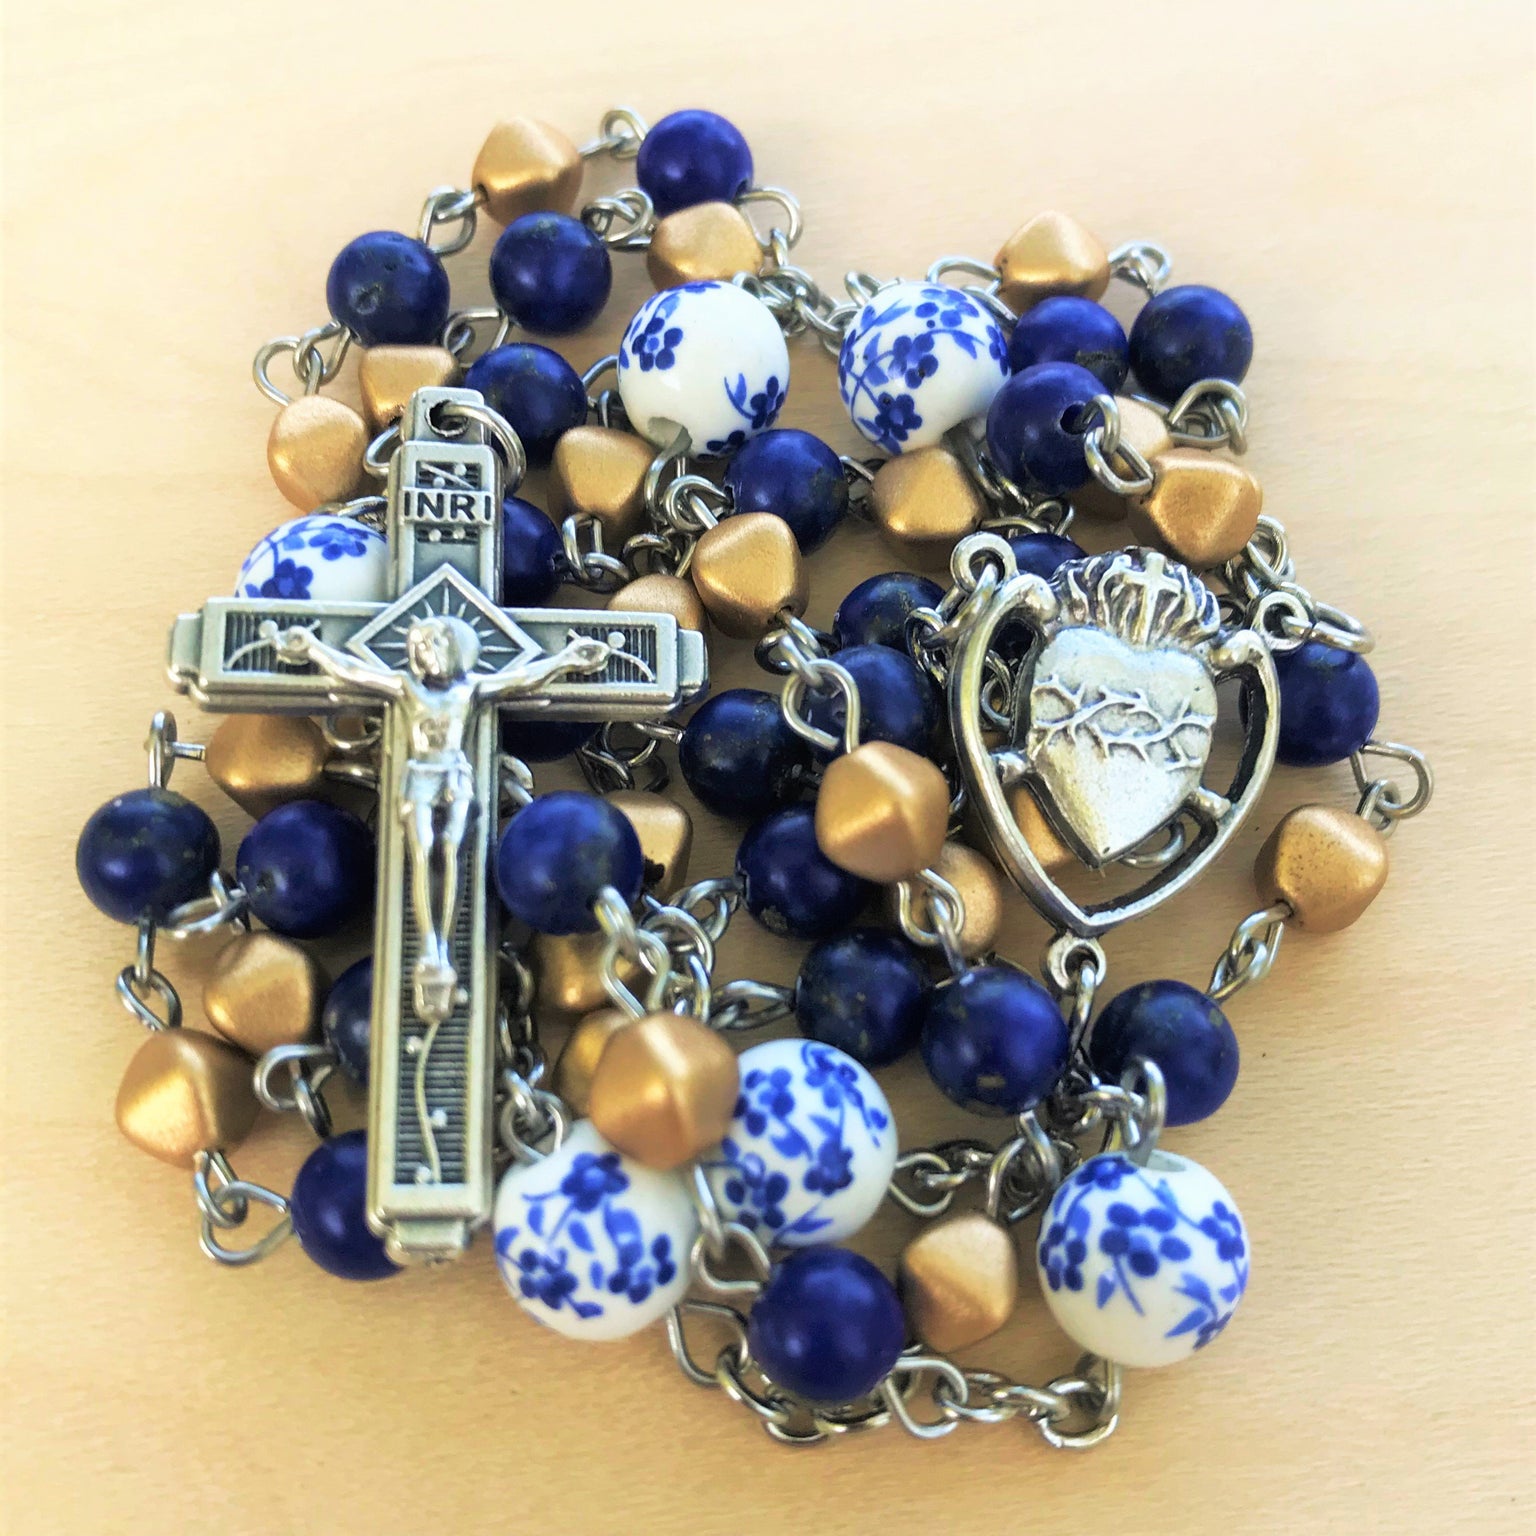 Born Again Rosaries' Indiana Gold rosary close-up.